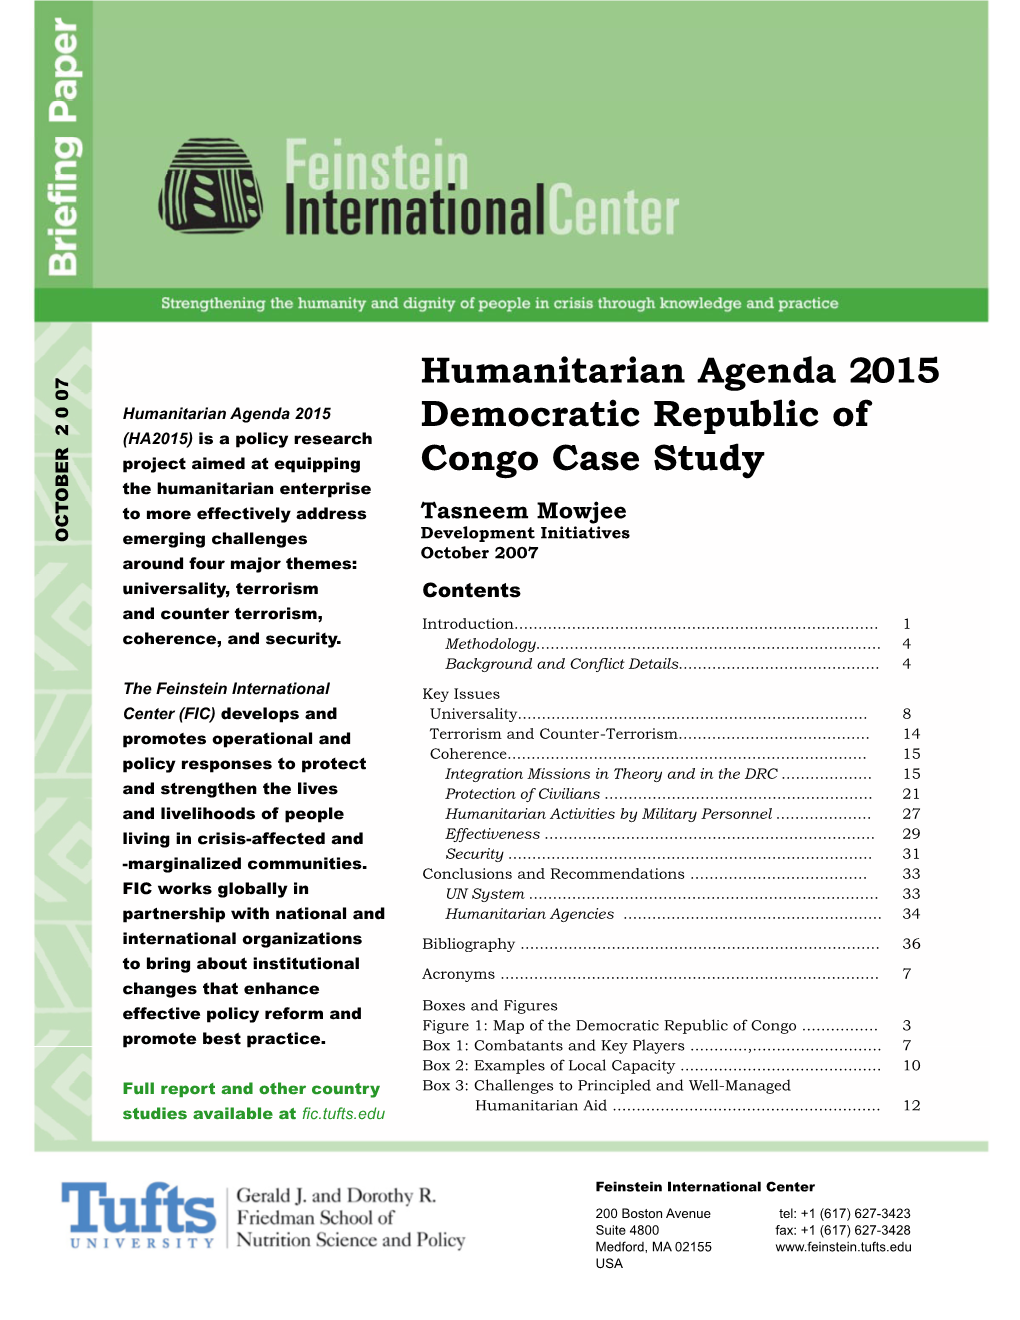 Humanitarian Agenda 2015 Democratic Republic of Congo